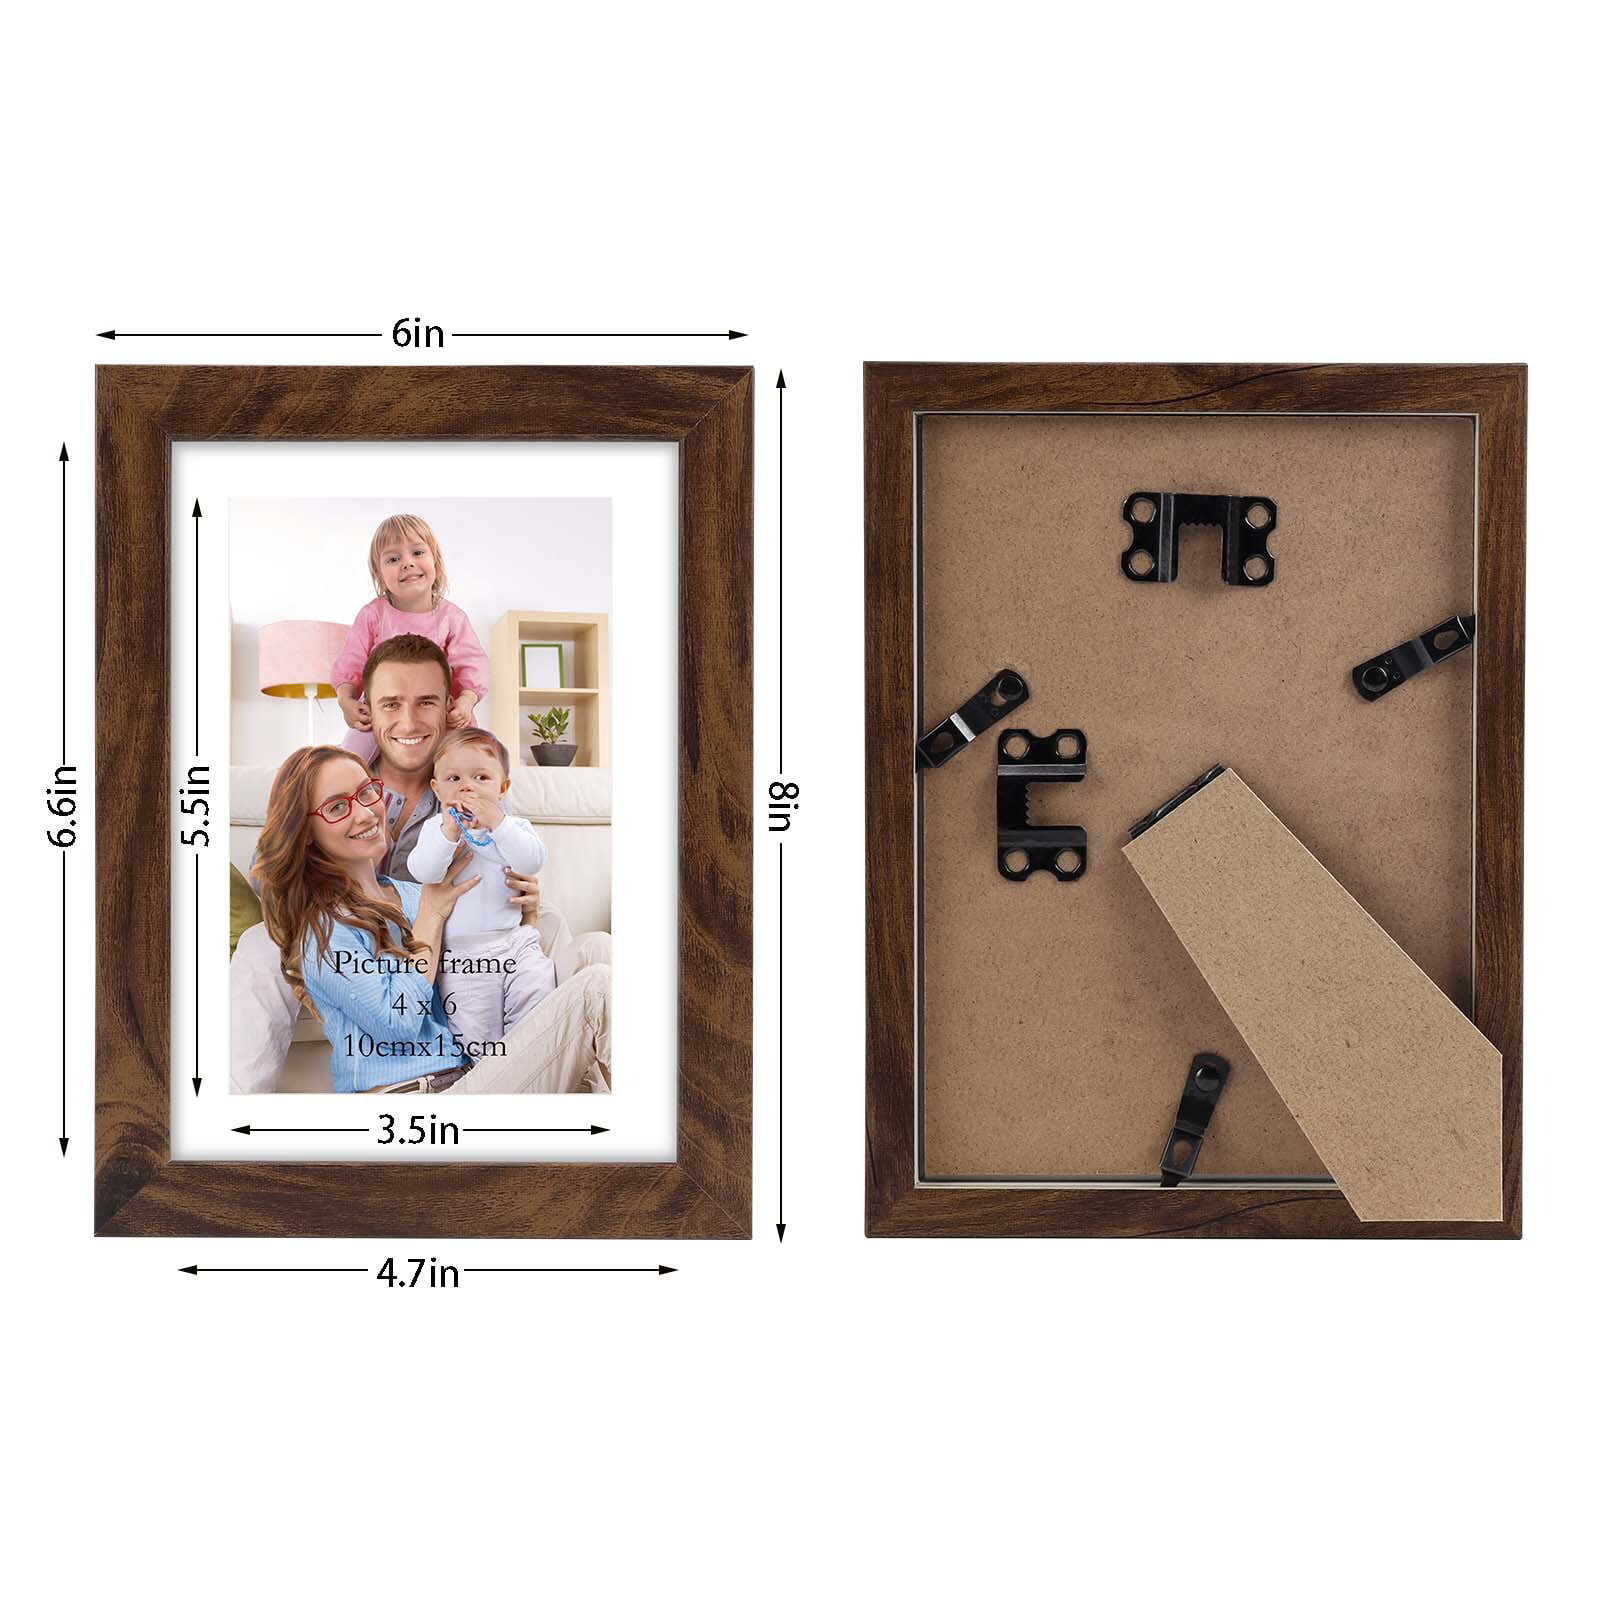 5x7 Picture Frames Set of 4 - Multi-Color